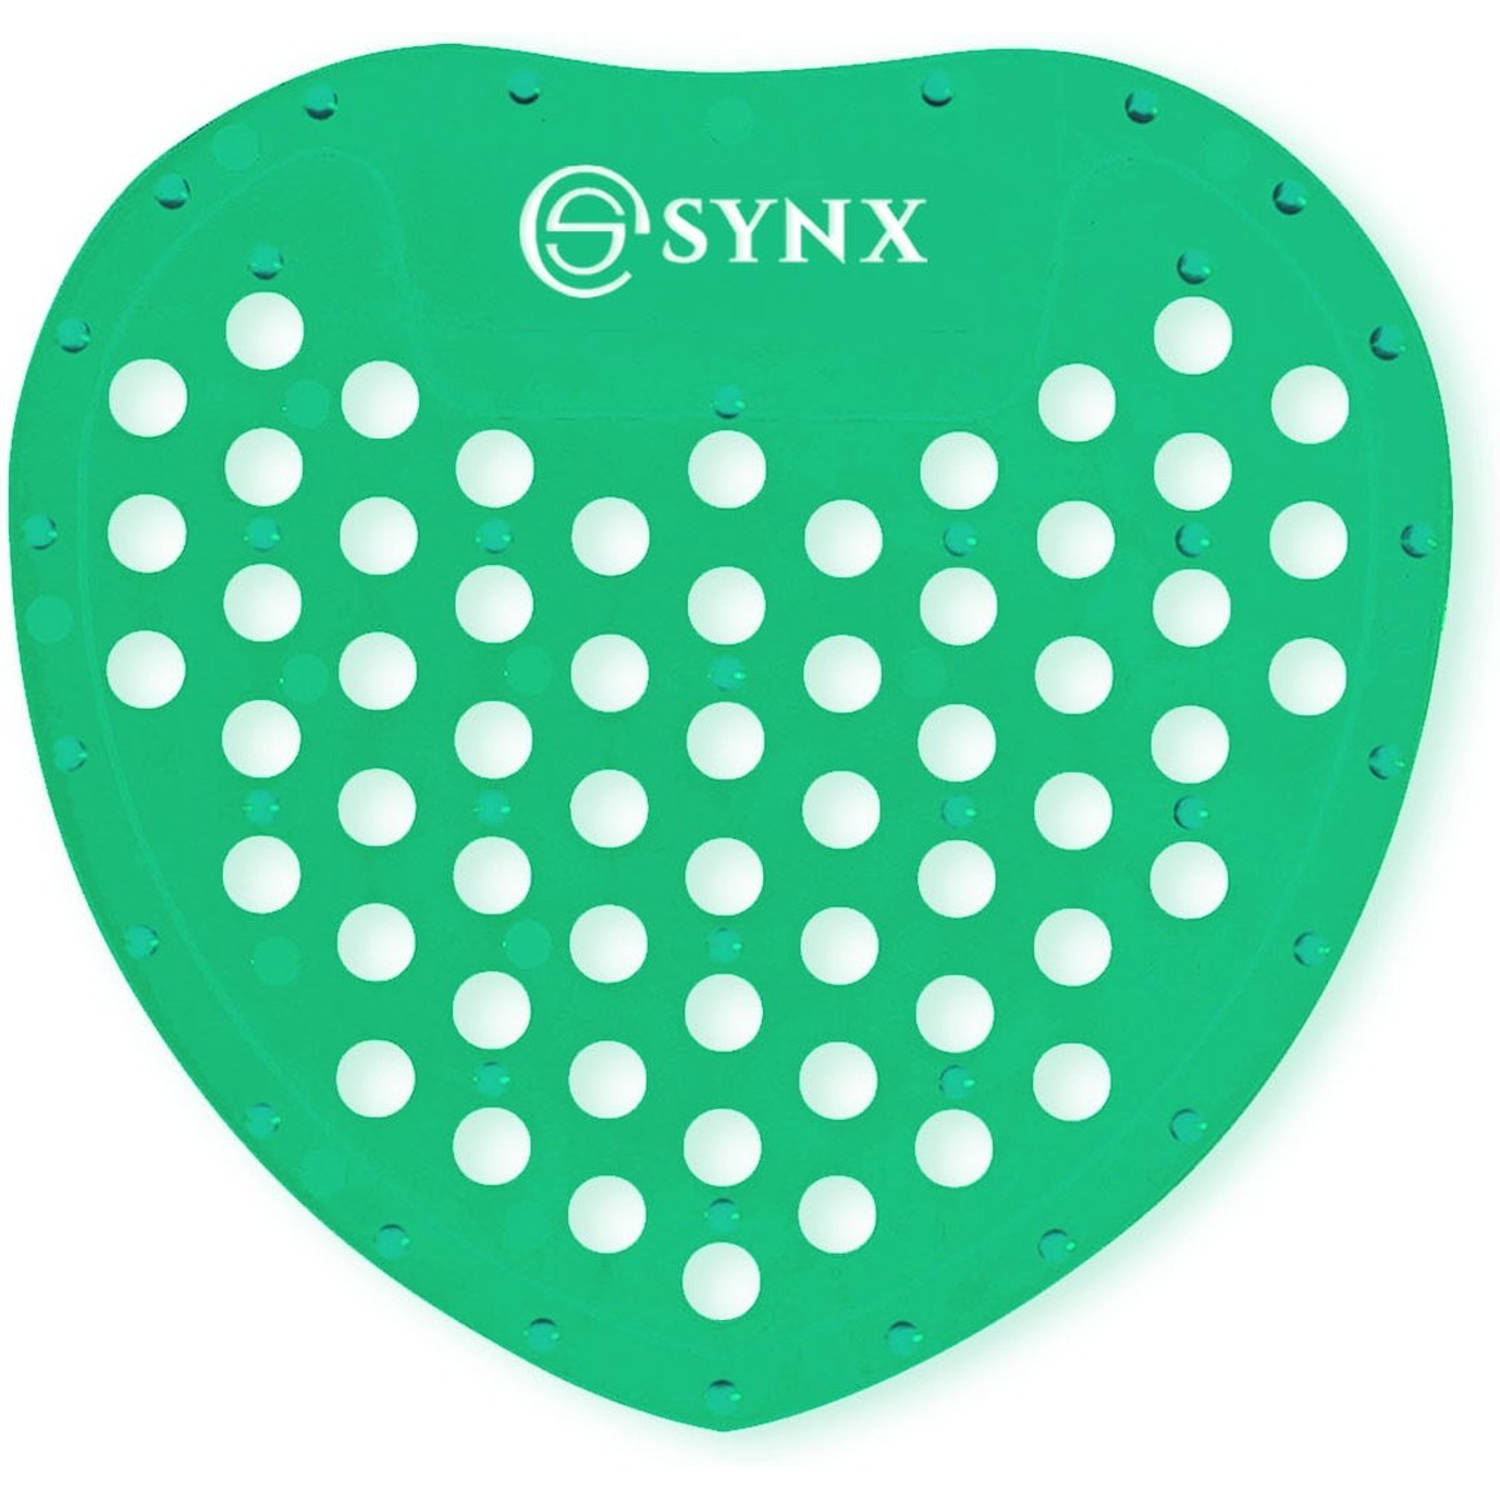 Synx Tools Urinoir Matje 1 stuks met Appel Geur - Anti spat mat WC - Toilet Mat - Groen - Frisse Geur - Anti Splash Mat - Wc Rooster - Urinoirrooster